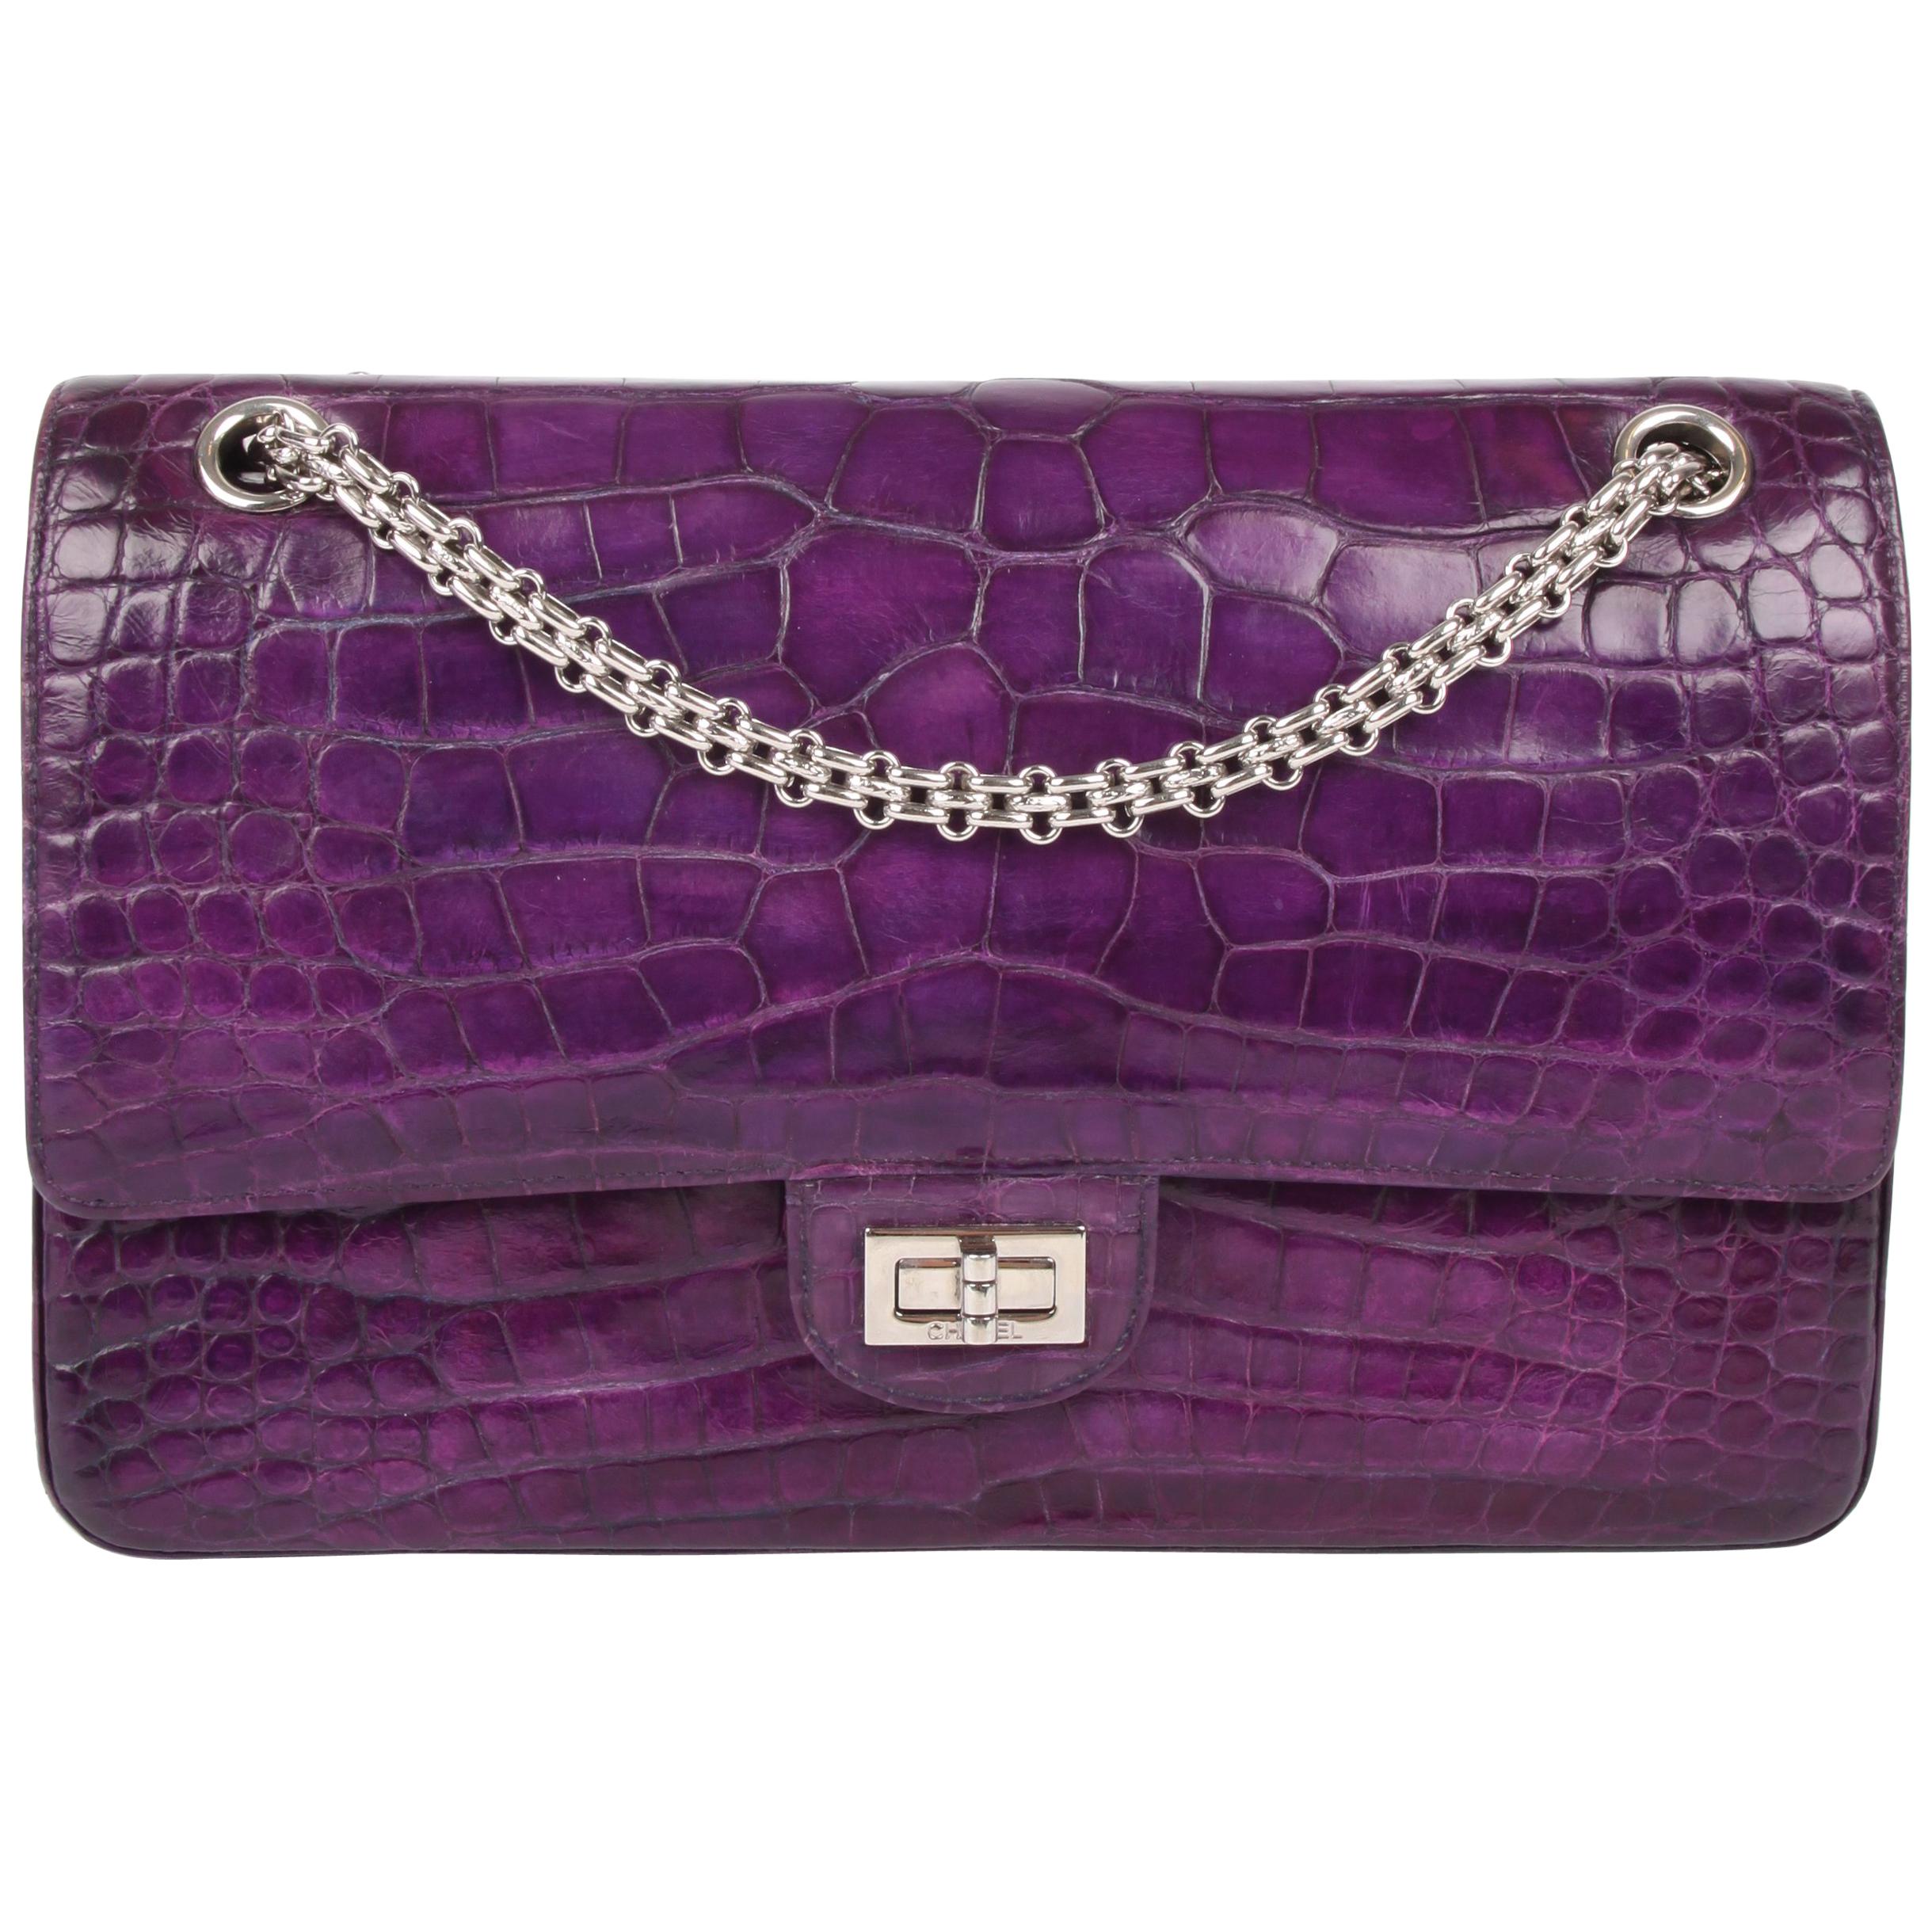 Chanel 2.55 Medium Double Flap Bag Crocodile Leather - purple